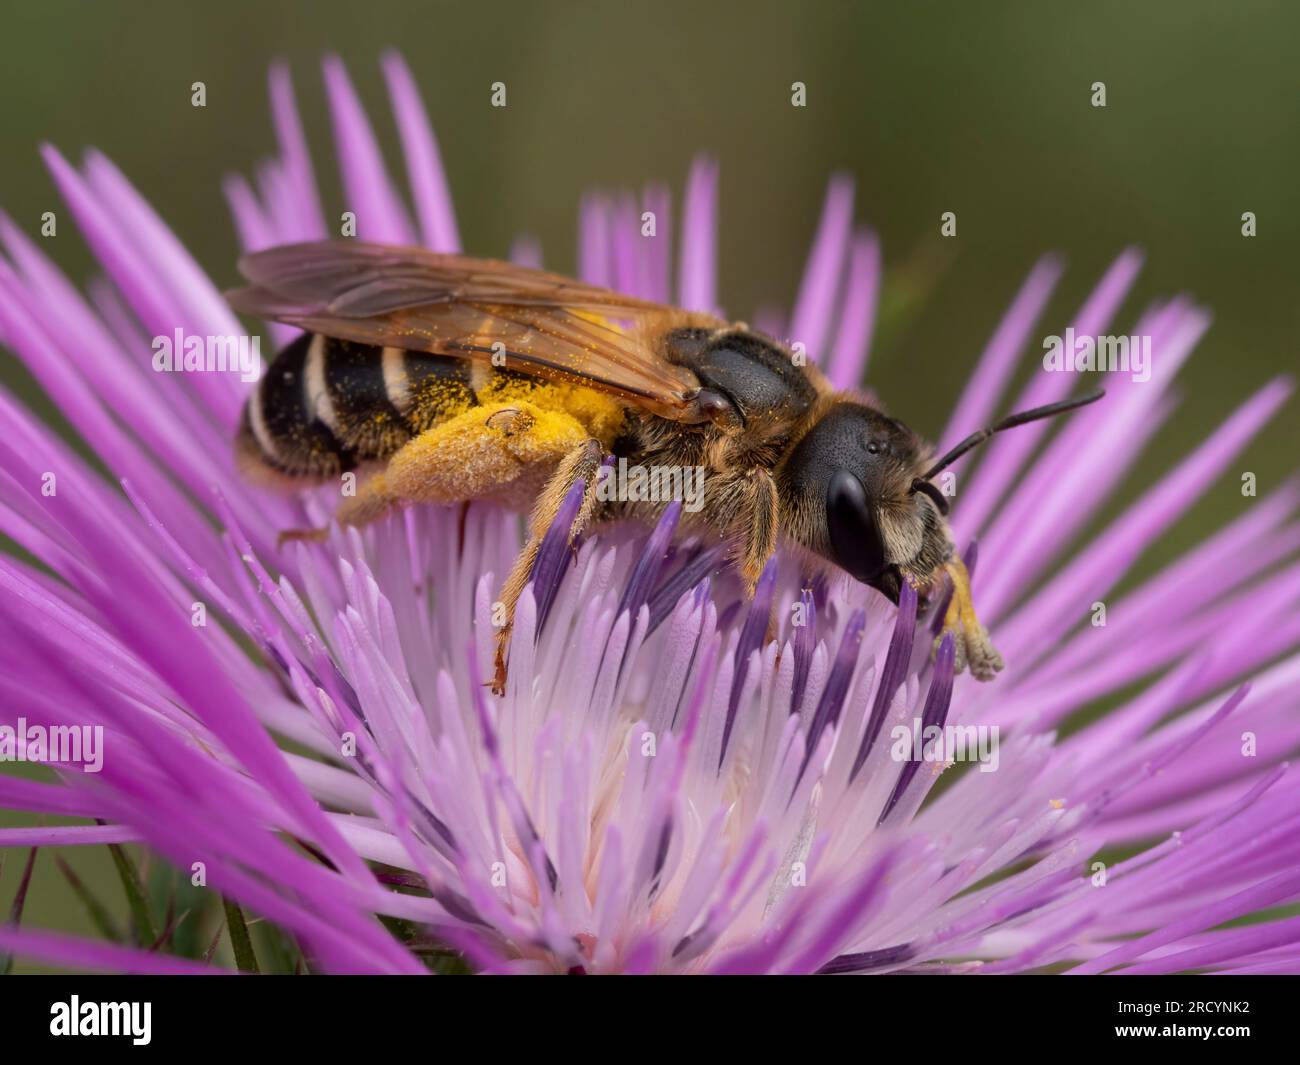 Crete Honey bee (Apis mellifera adami) nectaring on Milk thistle (Carduus marianus), near Spili, Crete, Greece Stock Photo